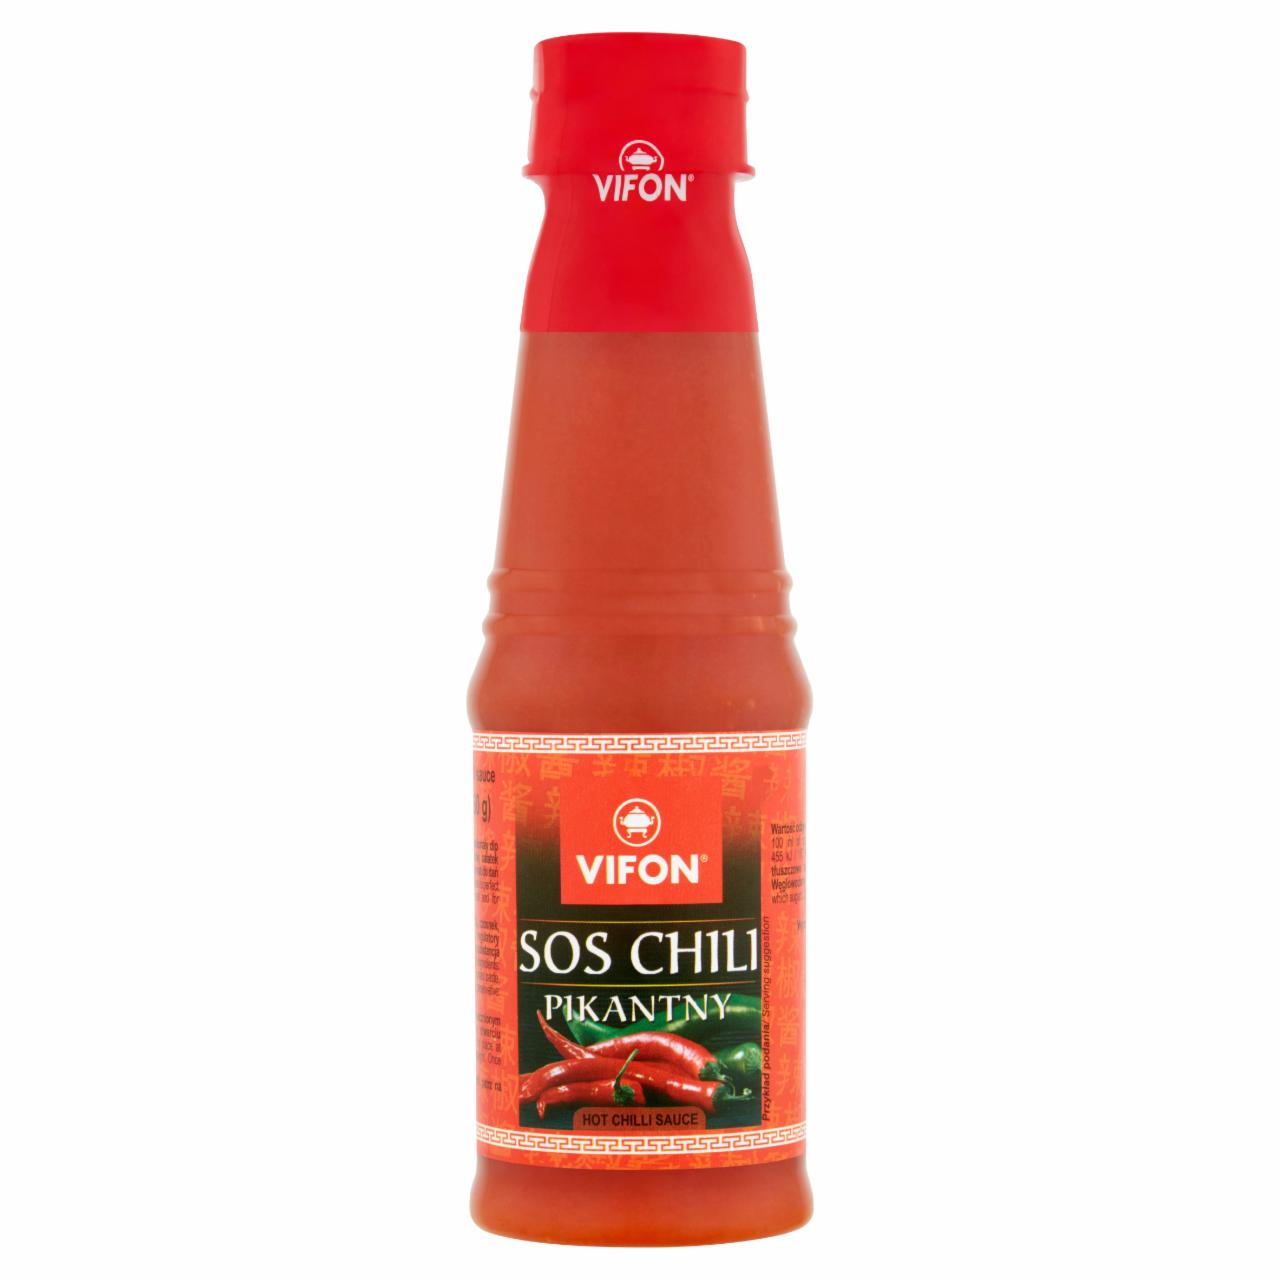 Zdjęcia - Vifon Sos chili pikantny 230 ml